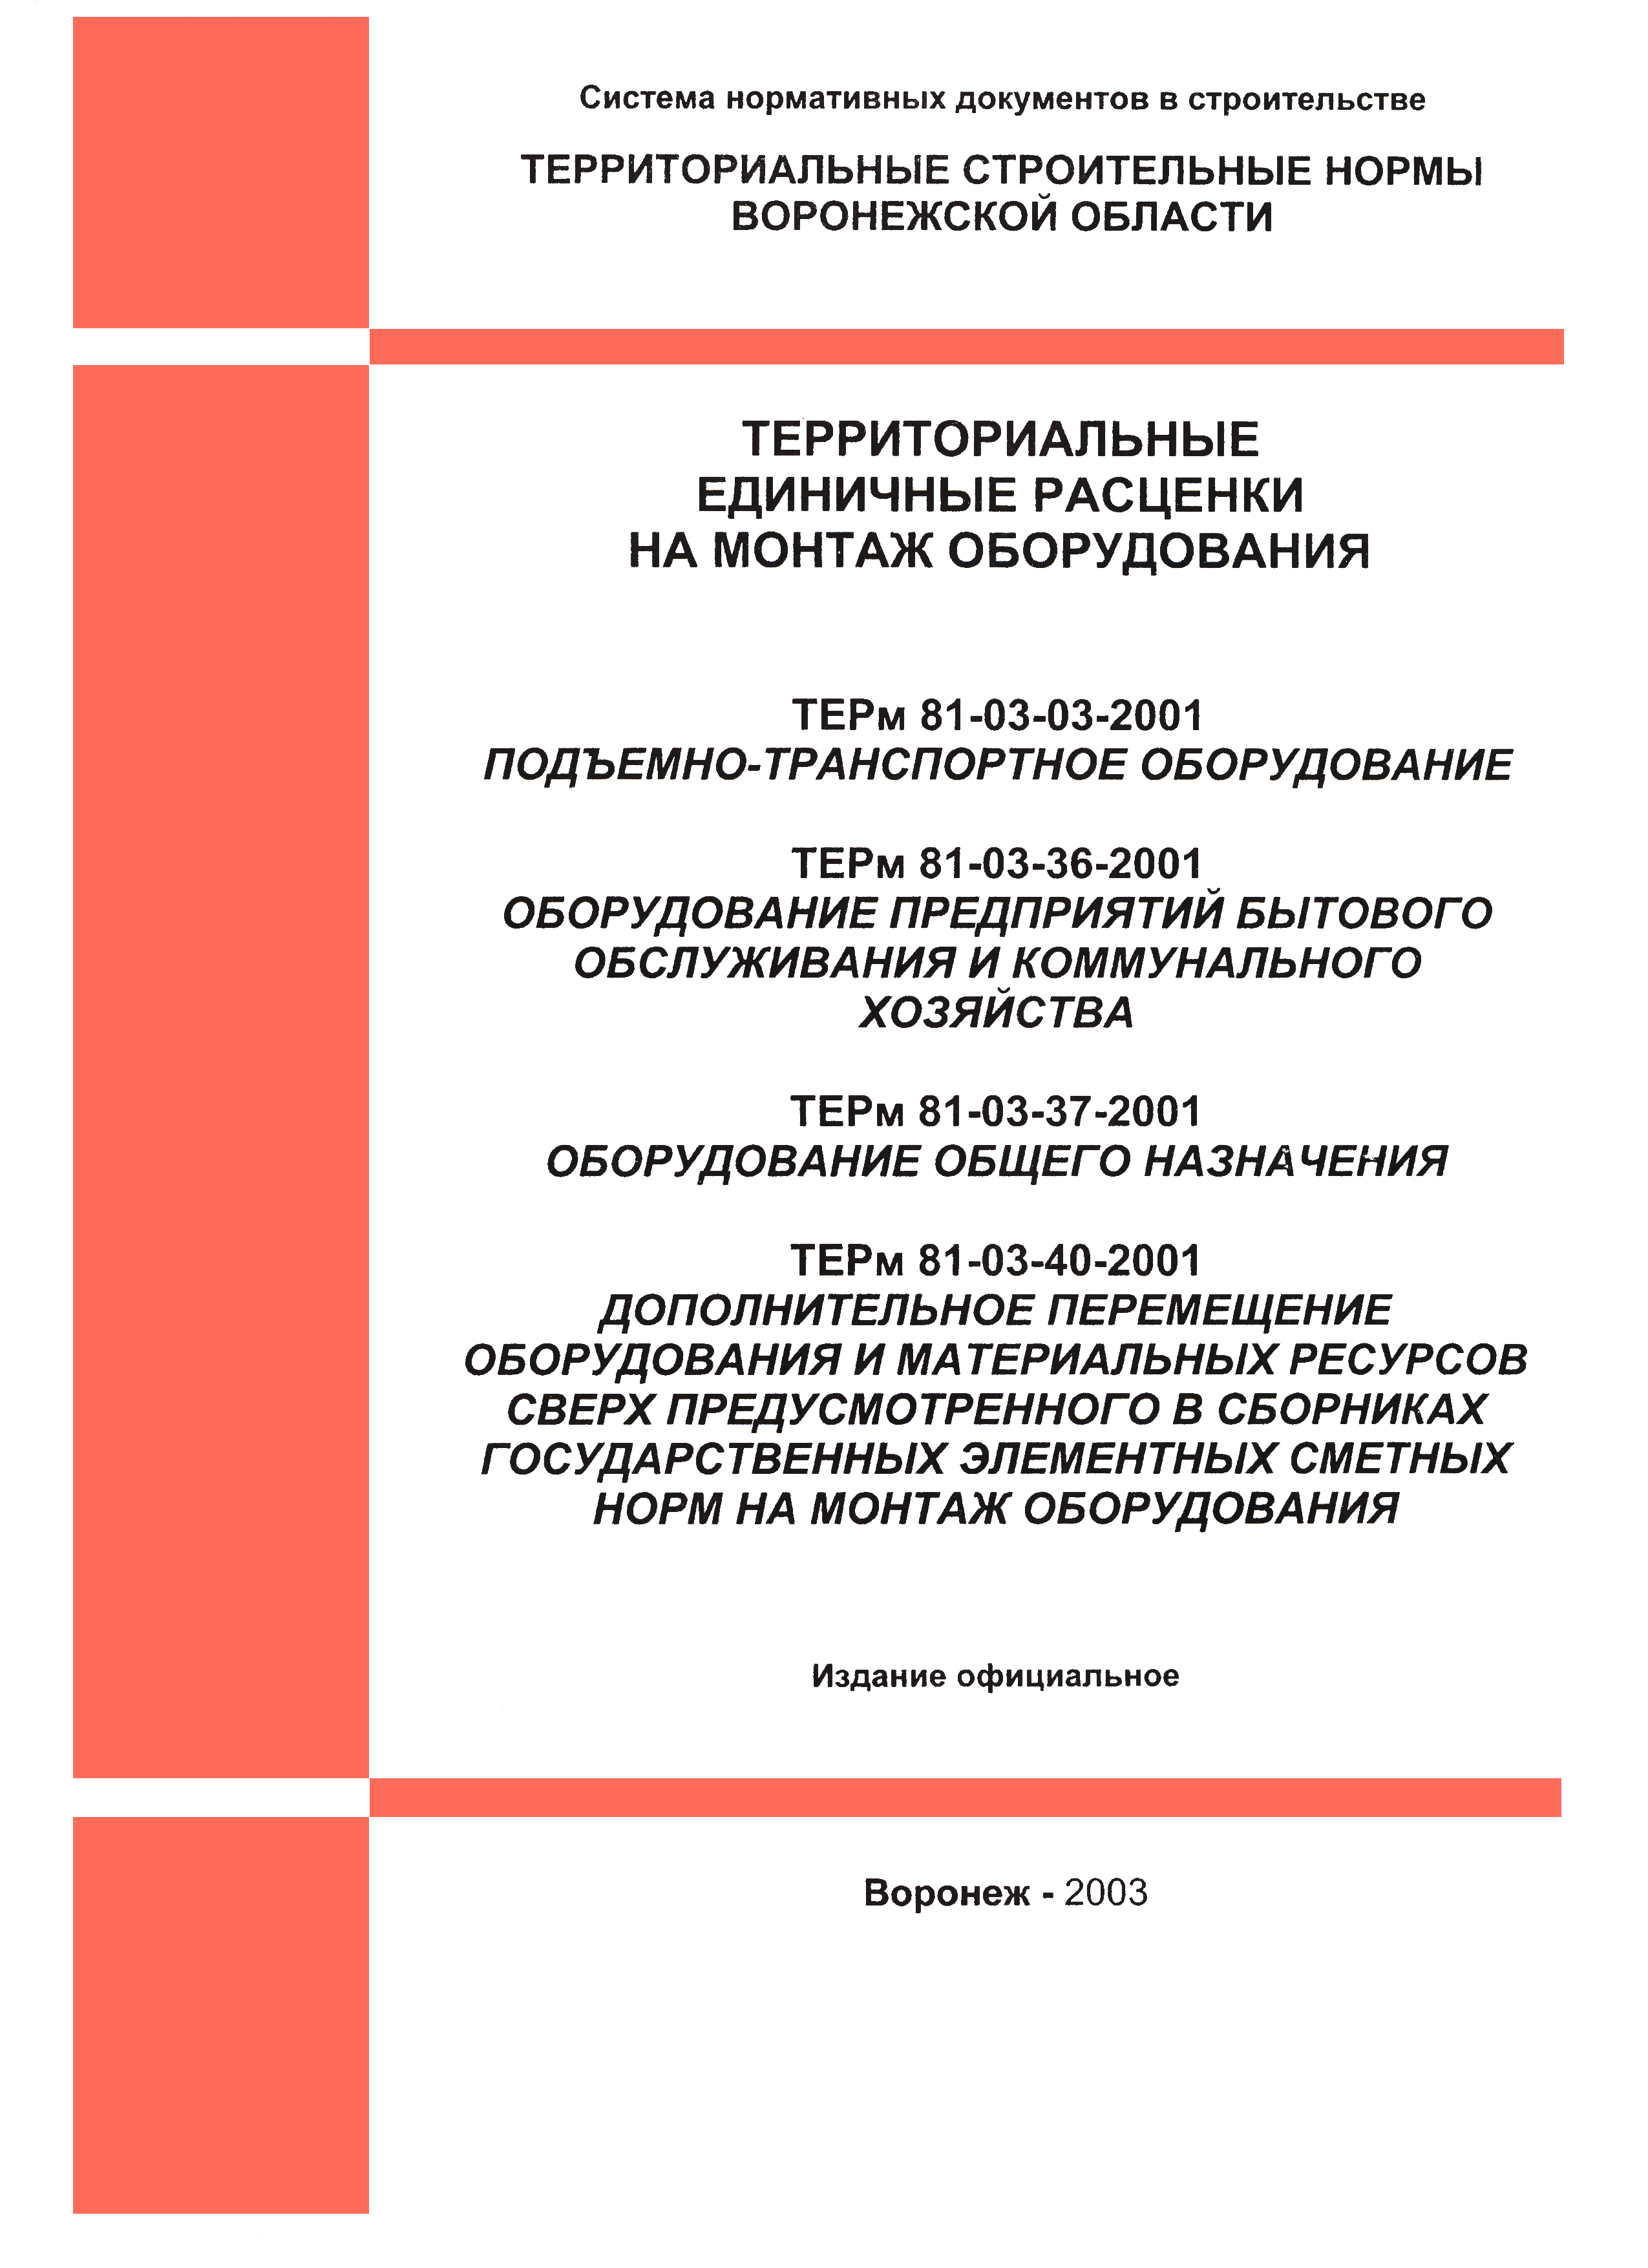 ТЕРм Воронежской области 81-03-40-2001